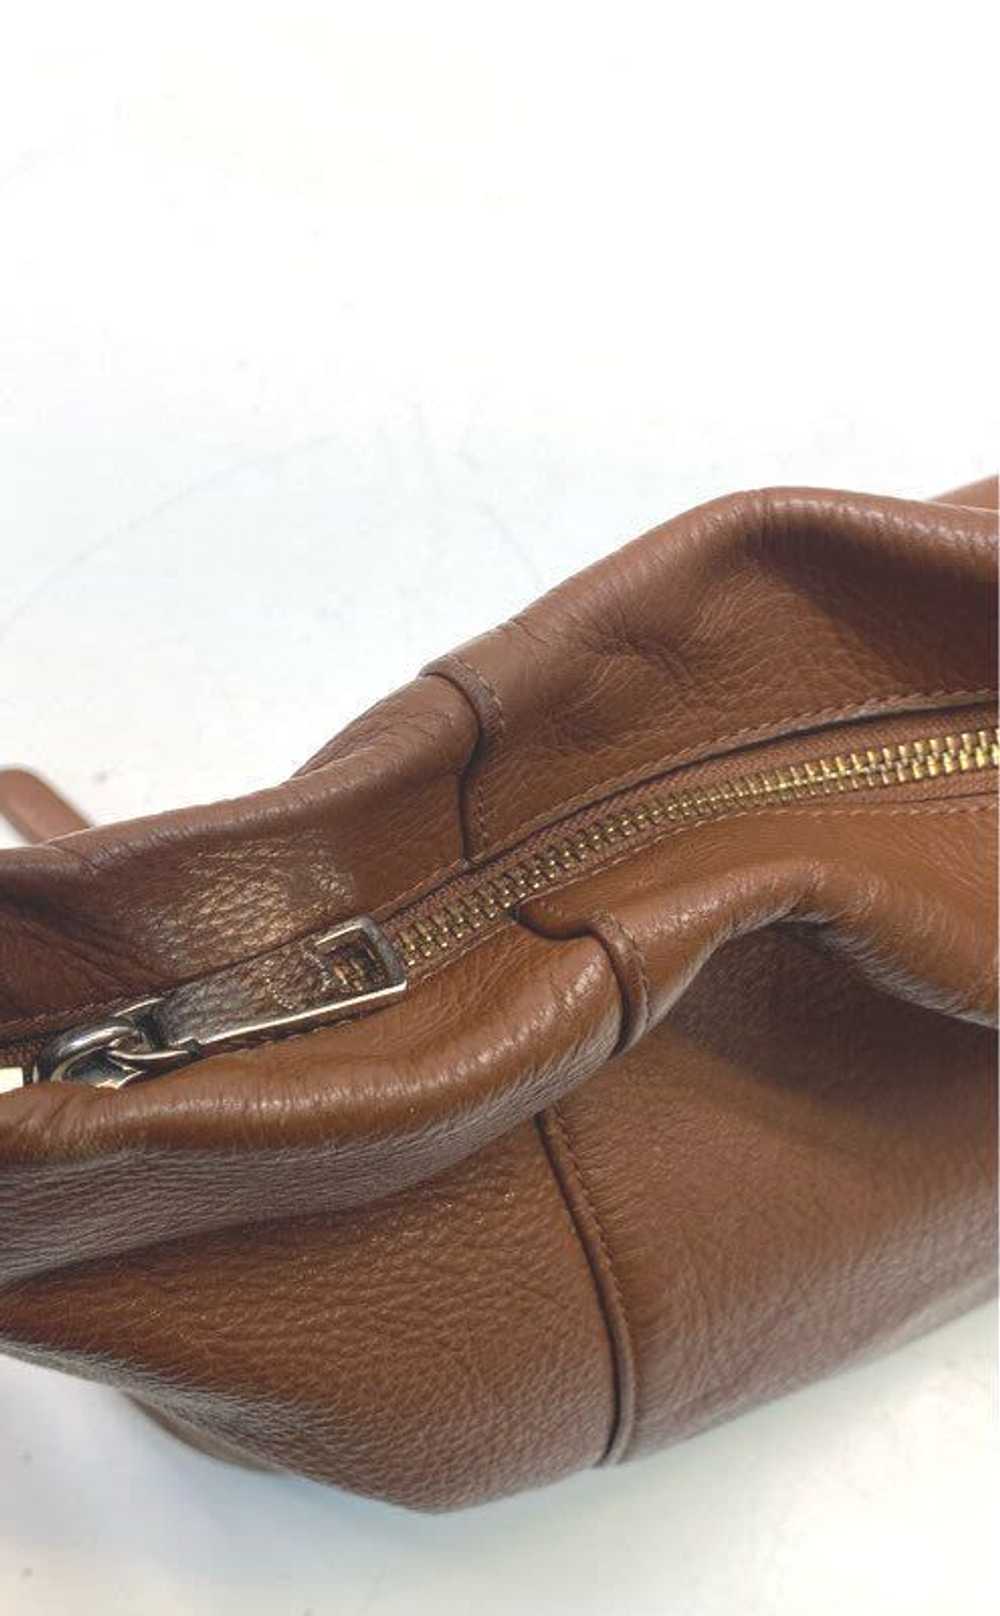 Coach Pebble Leather Isabelle Shoulder Bag Tan - image 7